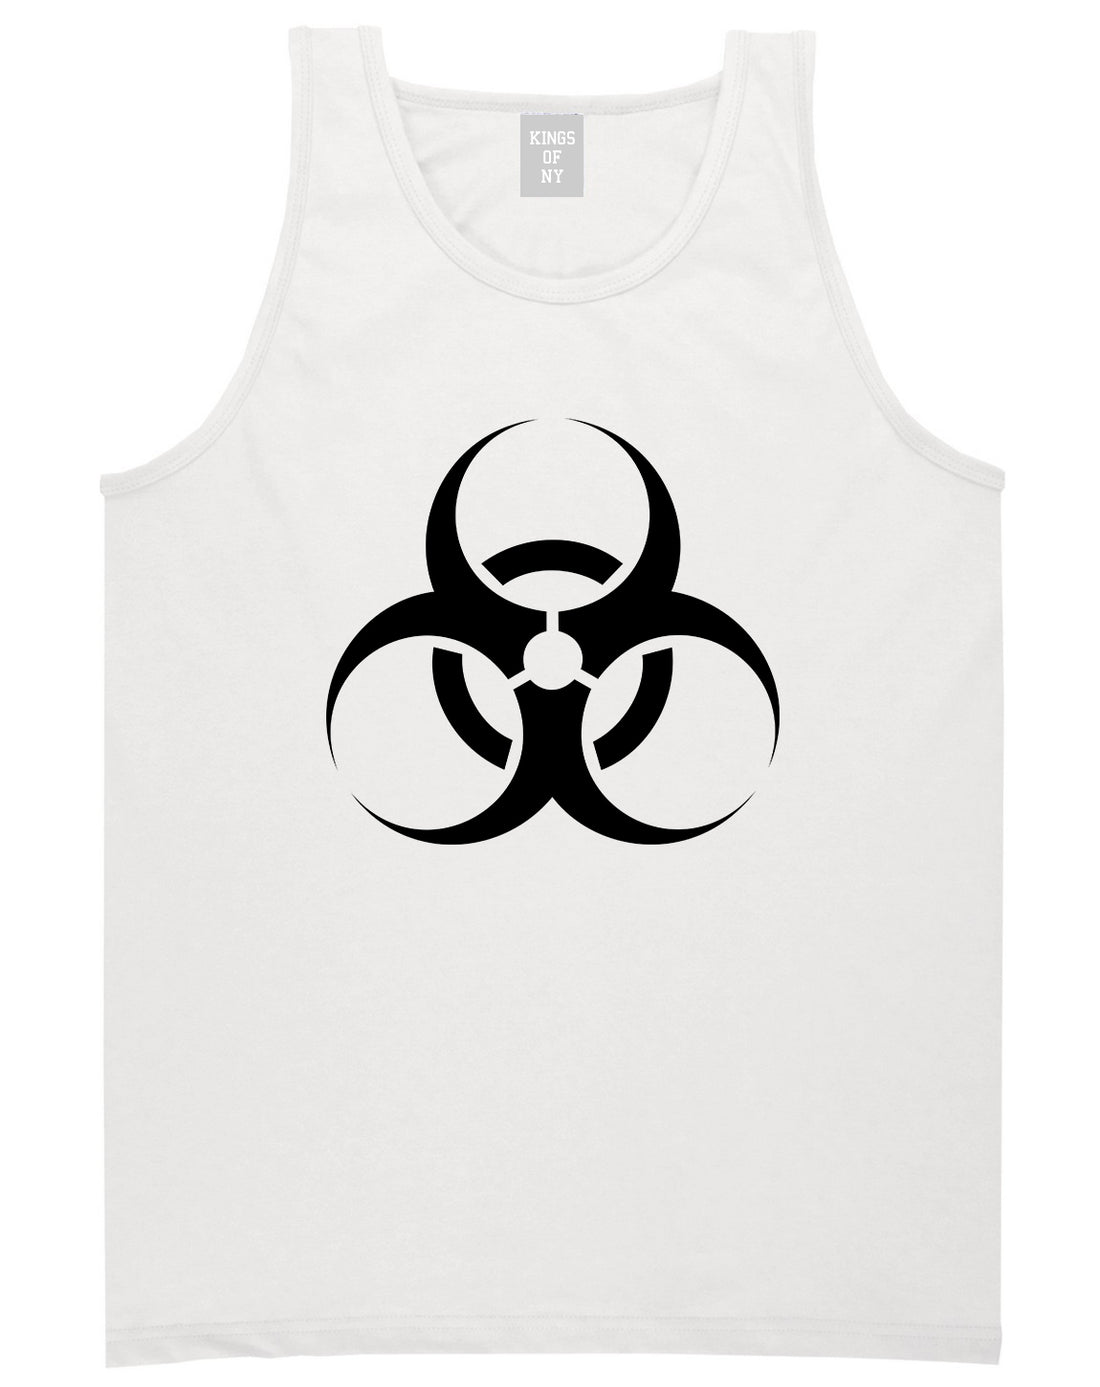 Biohazard Symbol White Tank Top Shirt by Kings Of NY